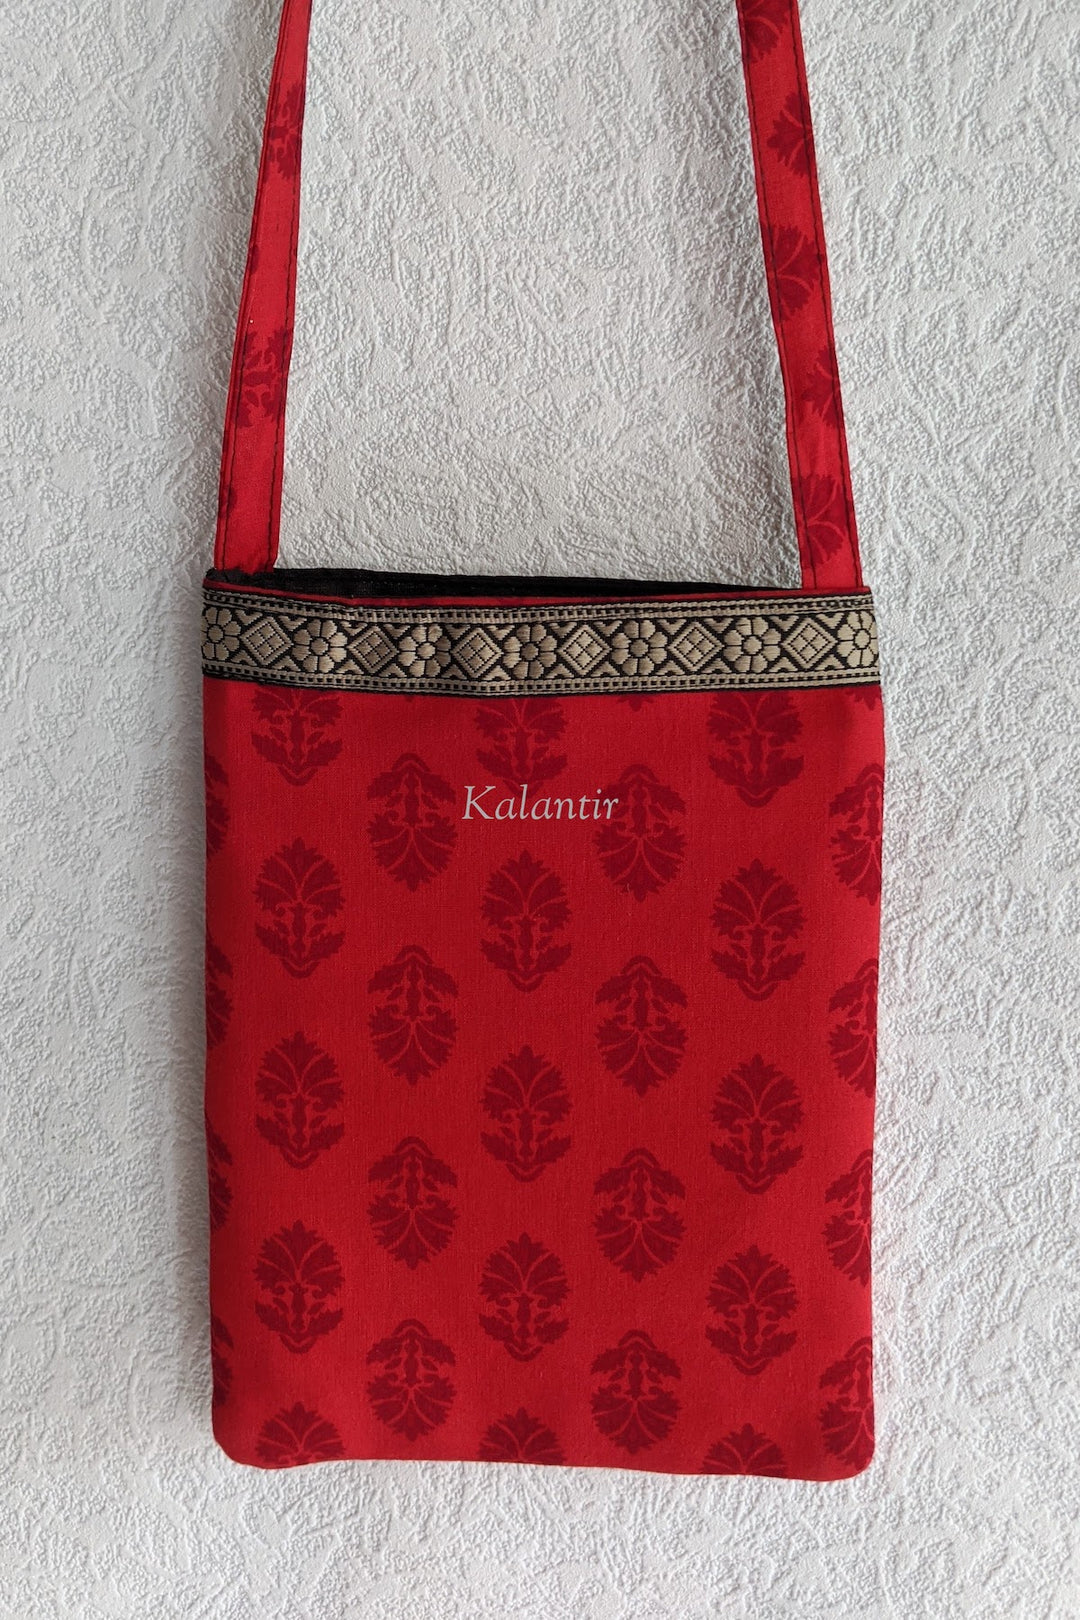 Block Printed Red Colored Sling Bag